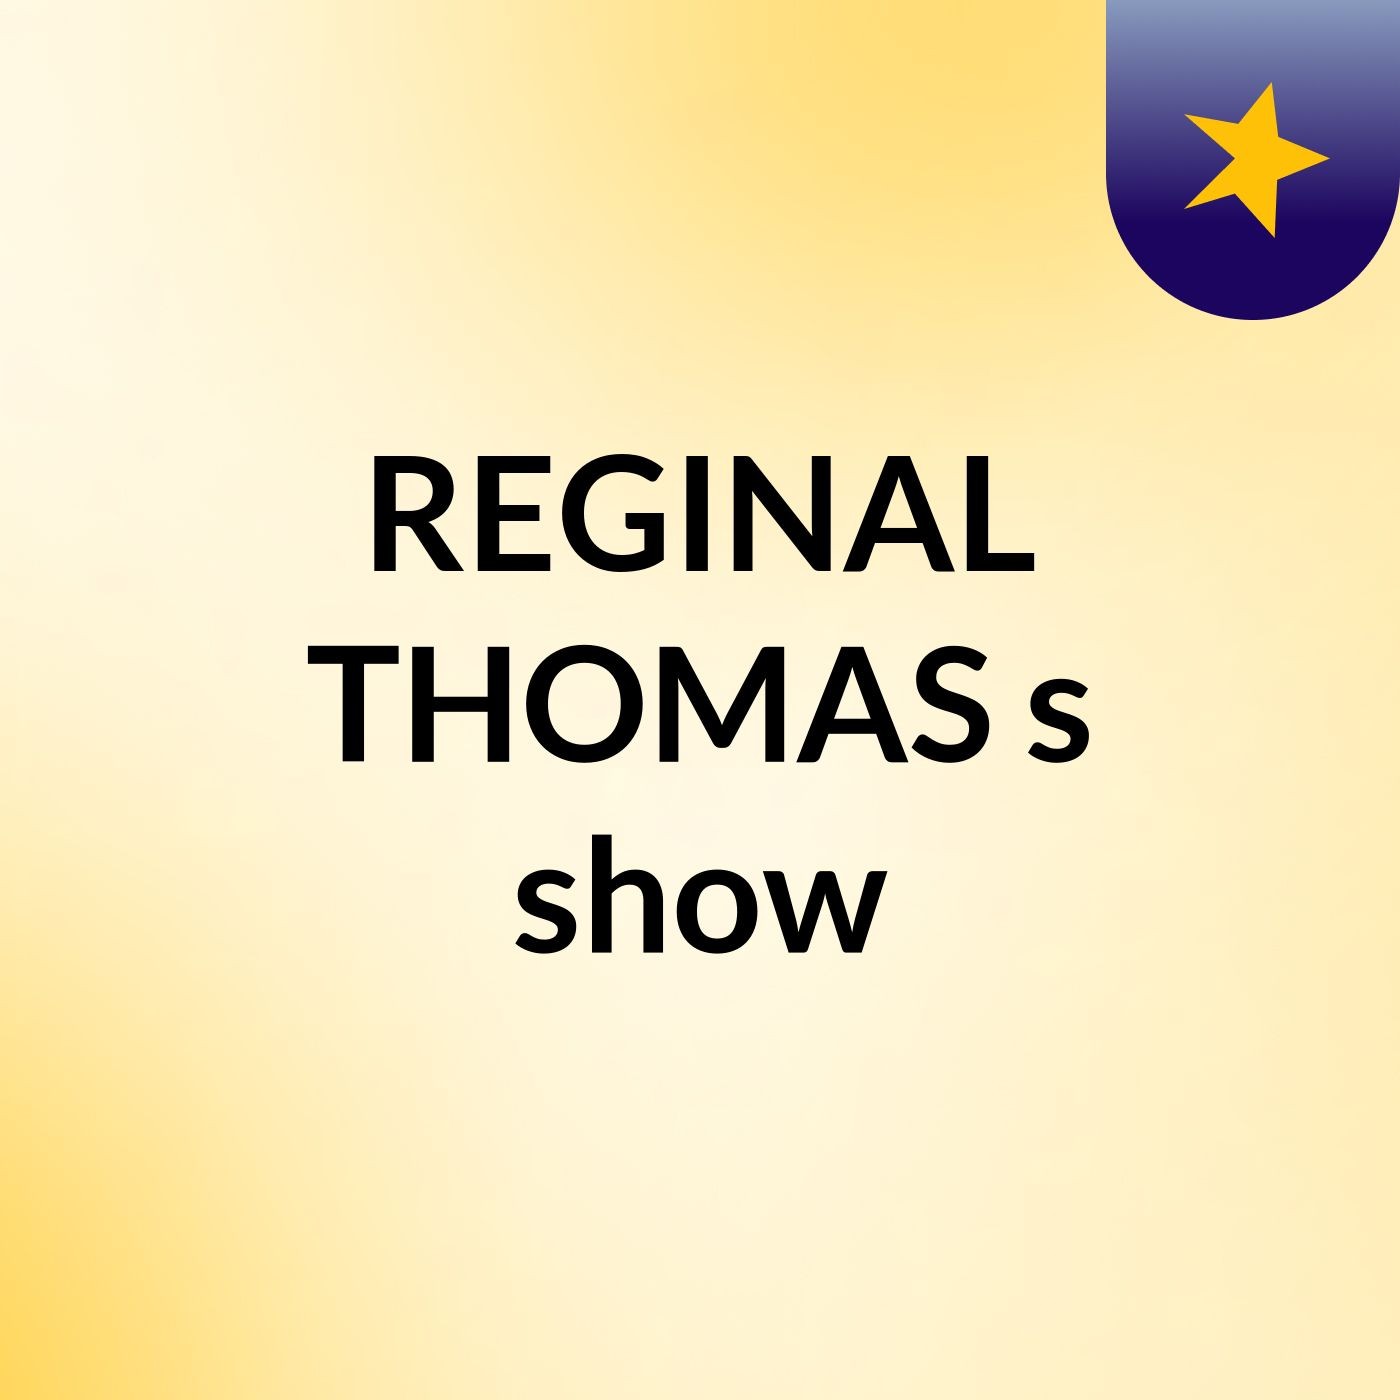 REGINAL THOMAS's show